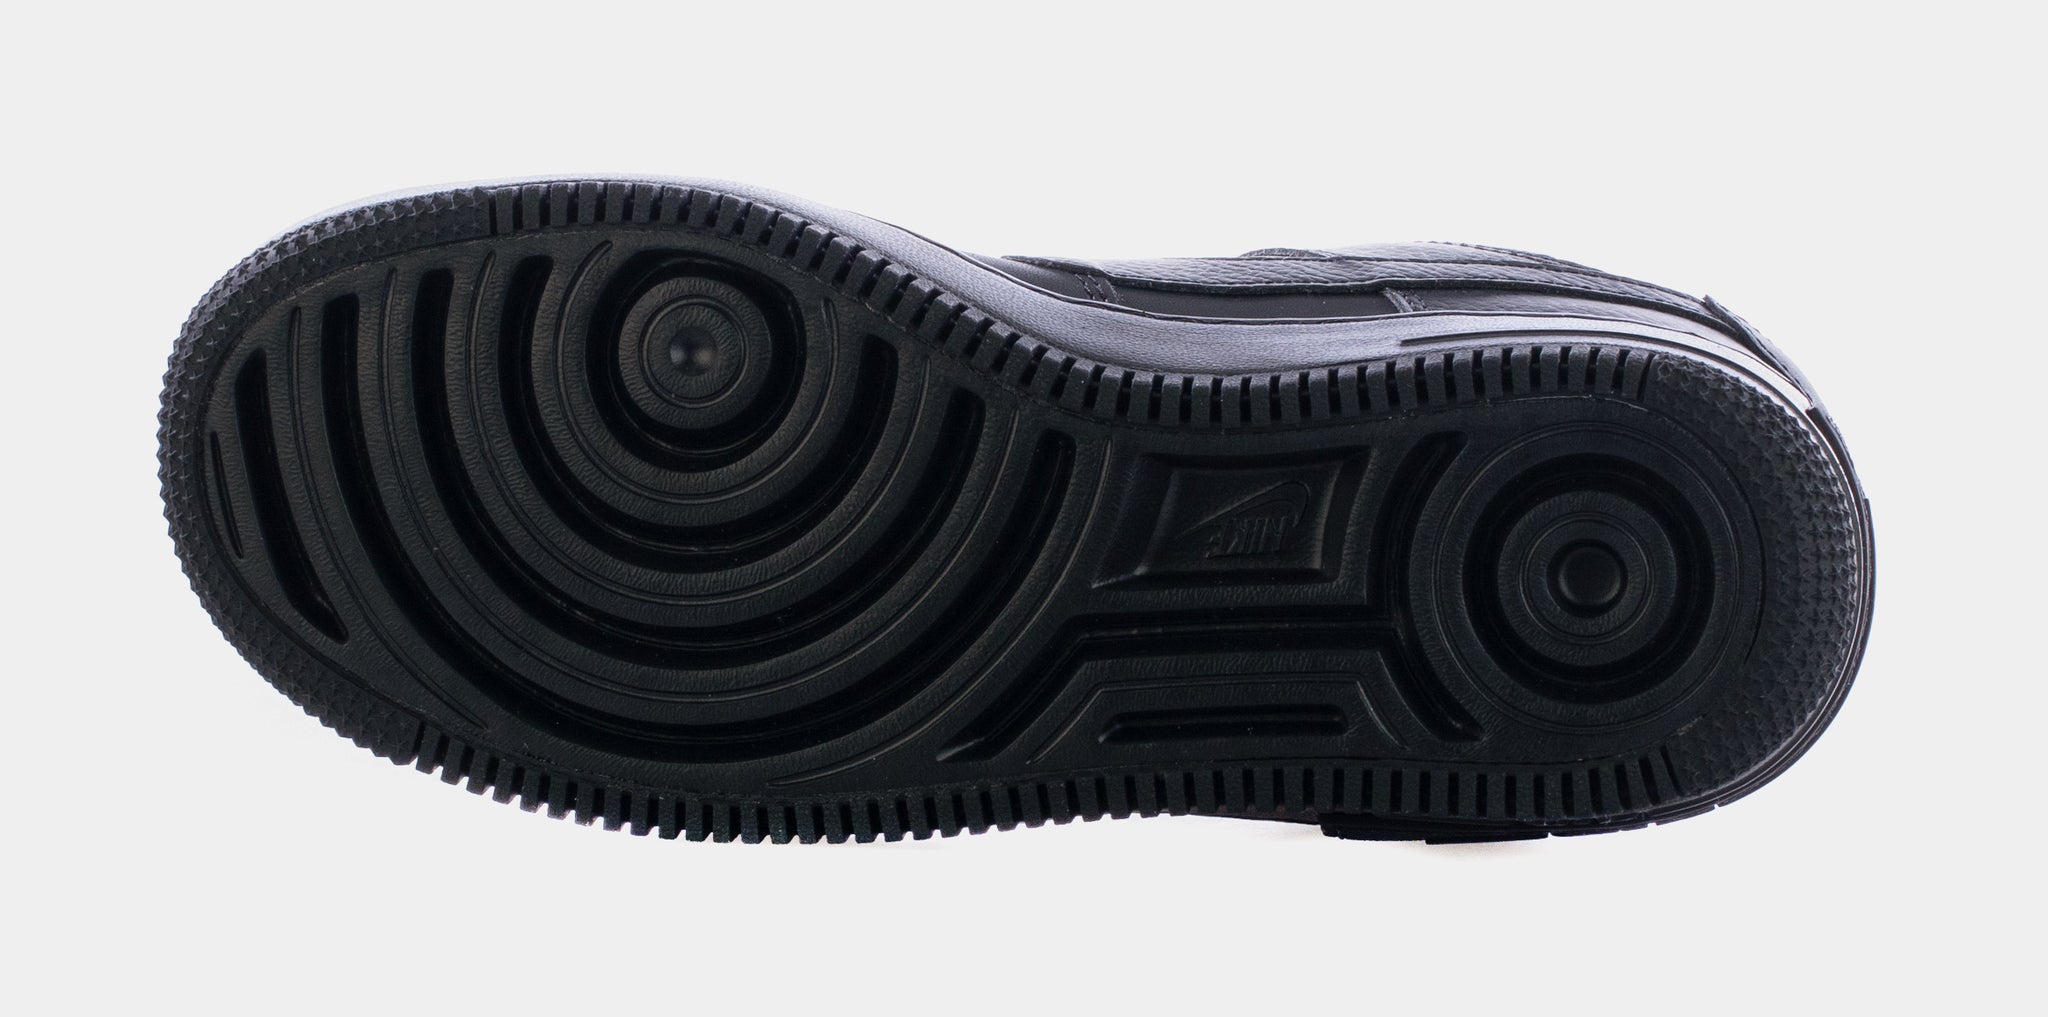 Nike Air Force 1 Shadow Sneaker in Black/Black/Black at Nordstrom, Size 7